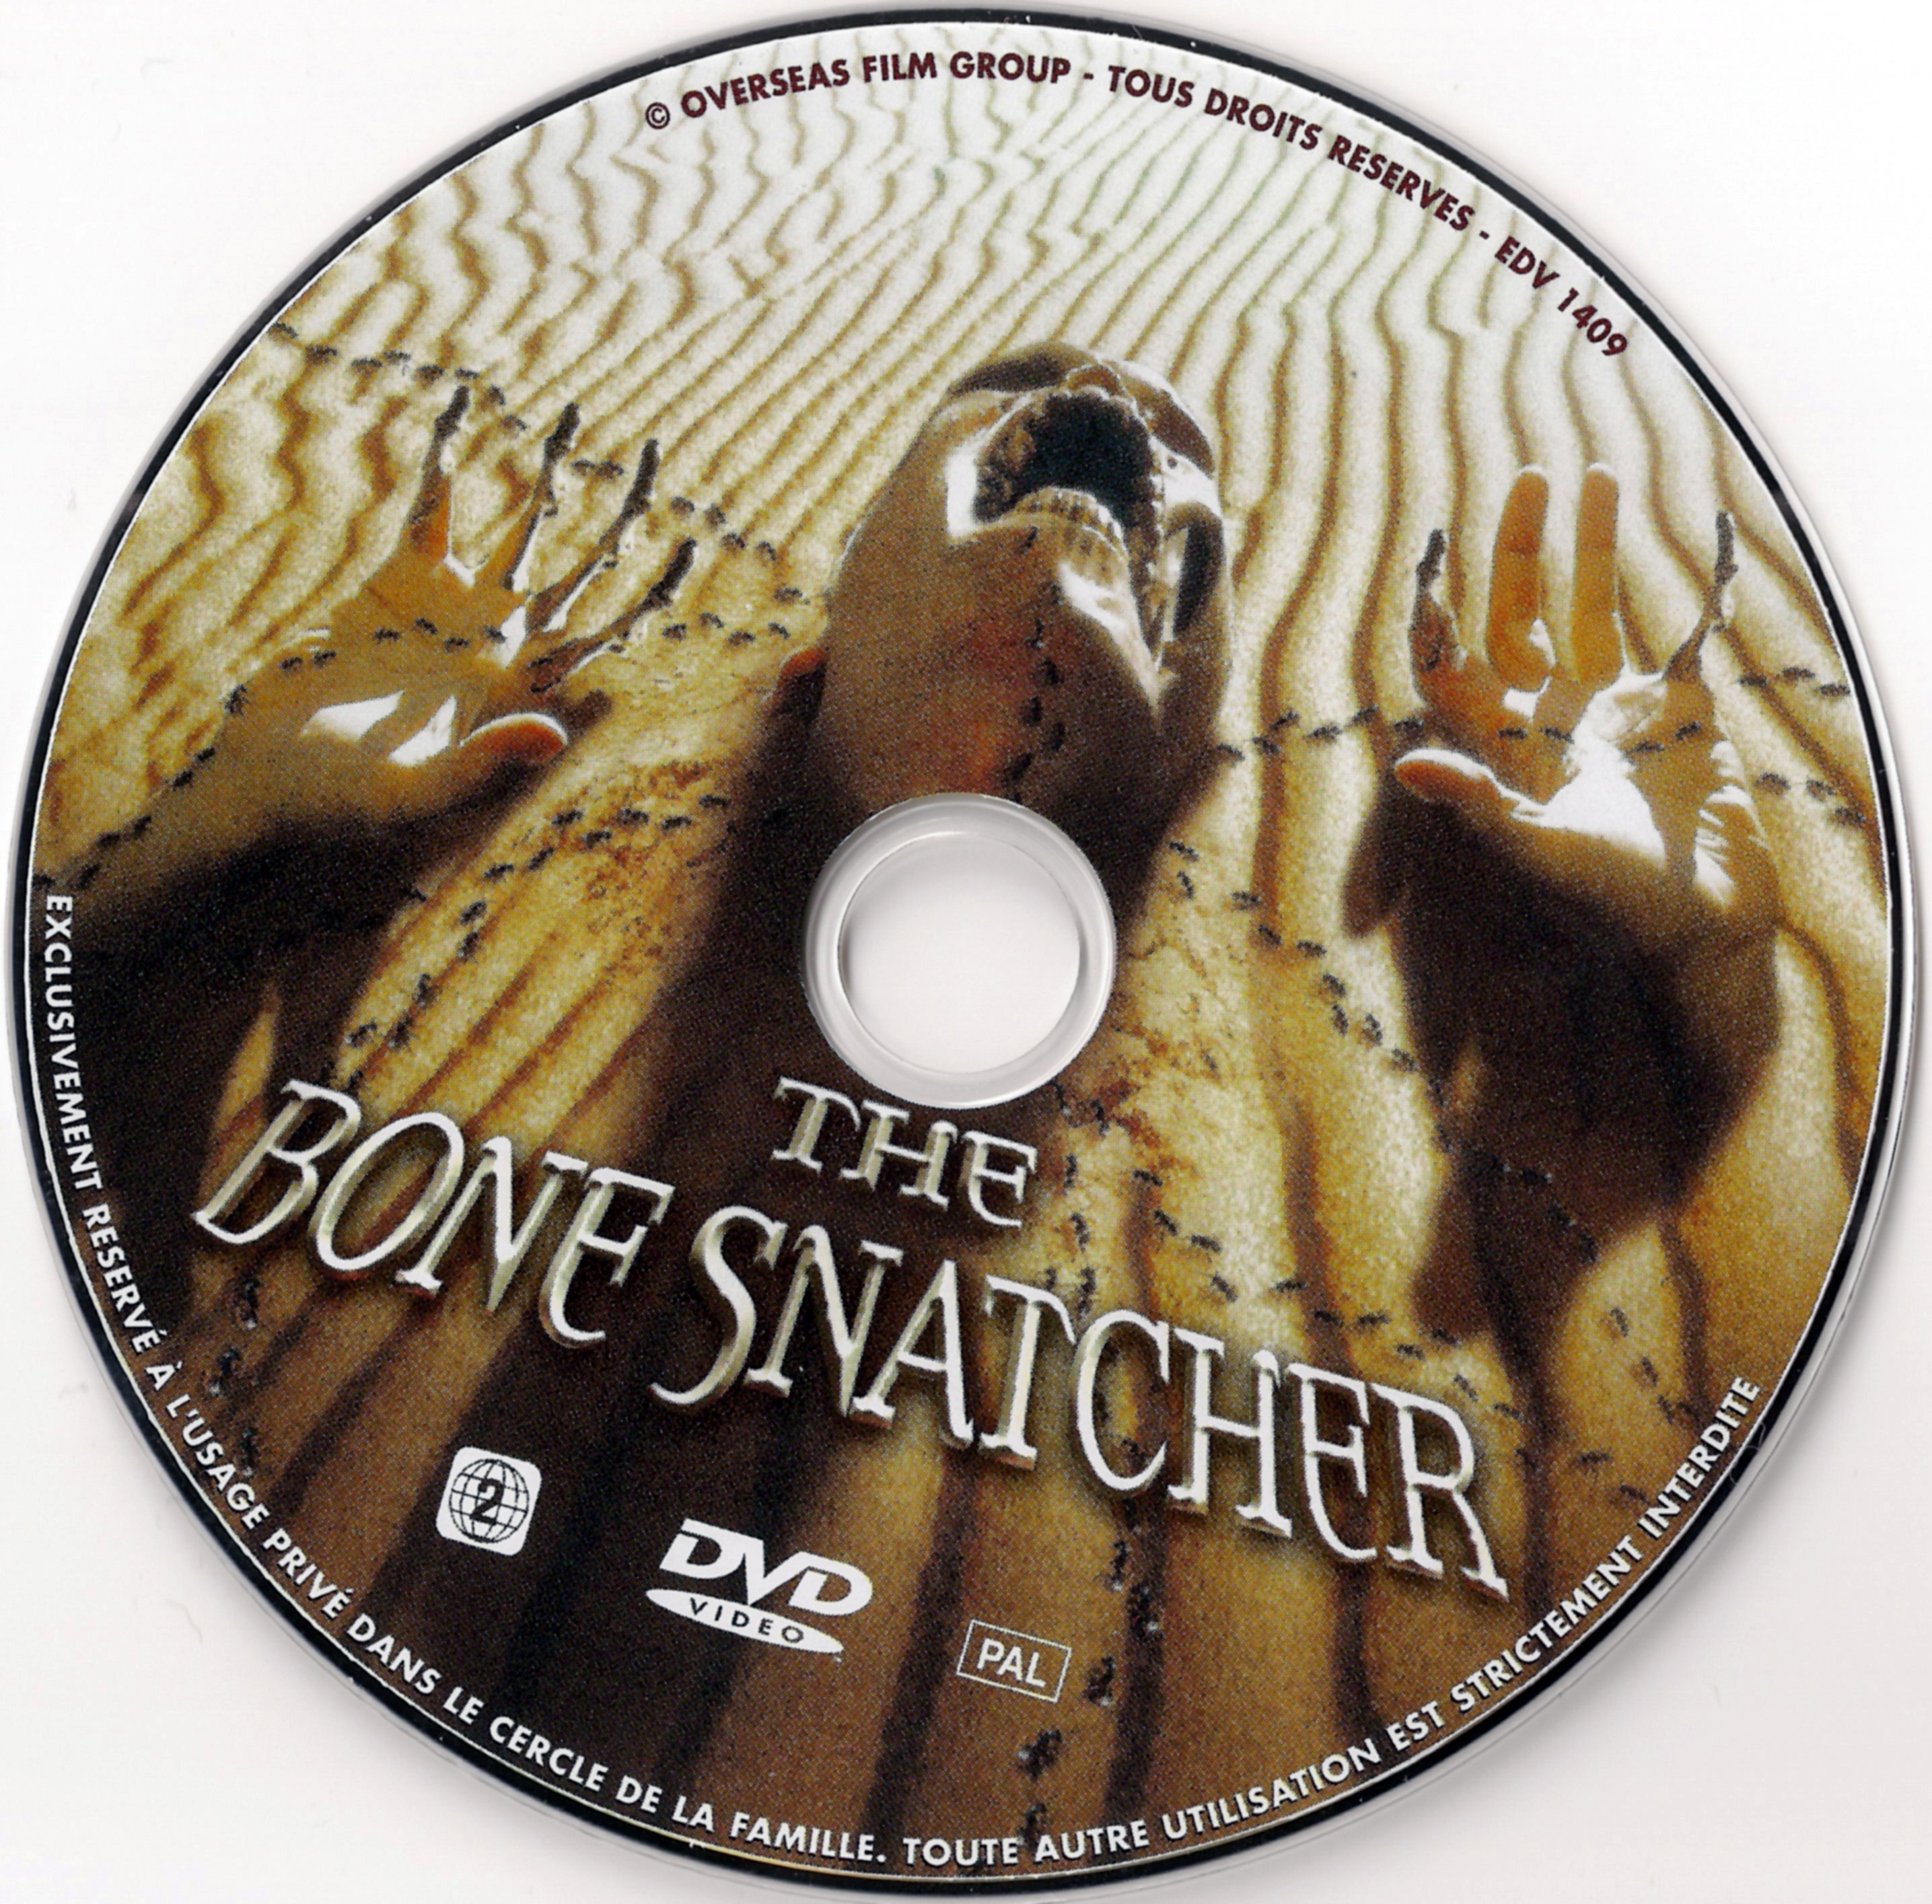 The bone snatcher